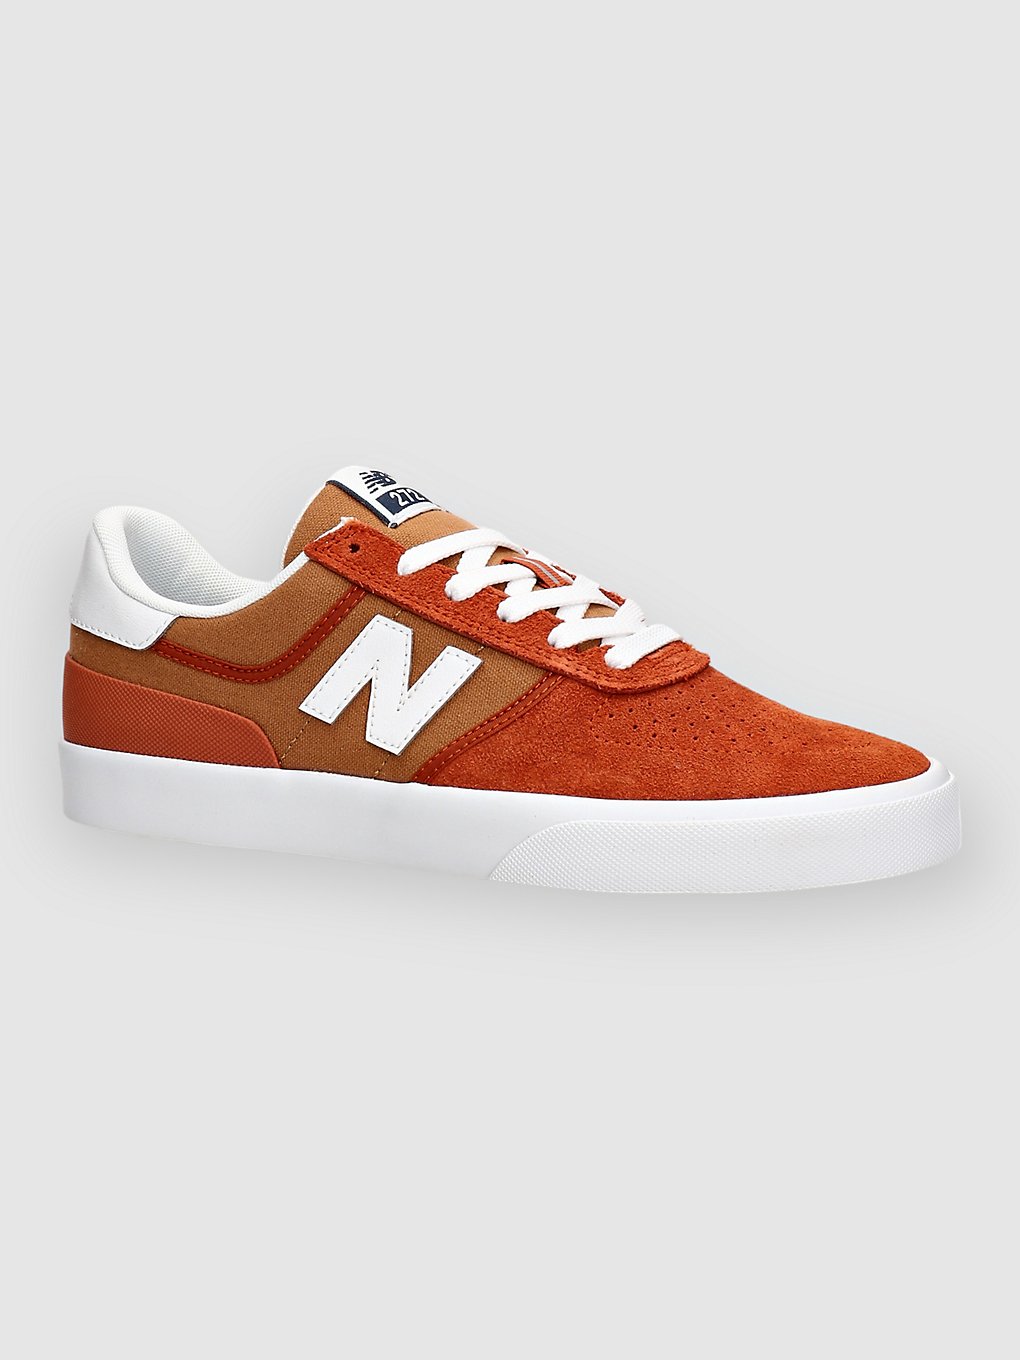 New Balance Numeric 272 Autumn Skate Shoes rust